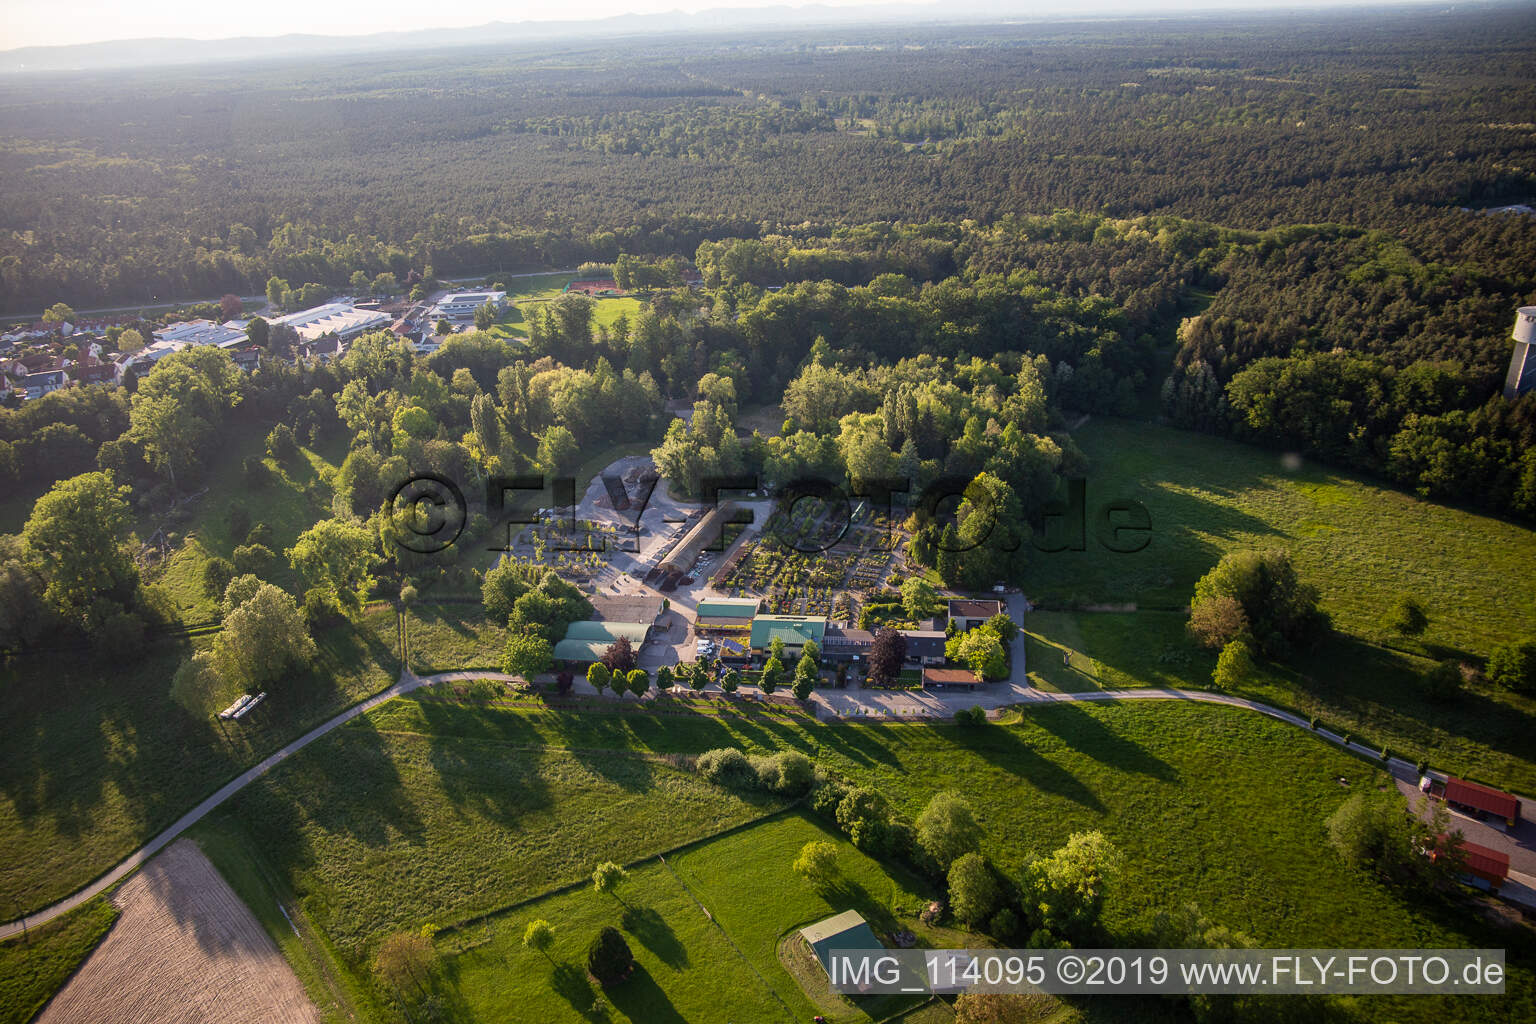 Drone image of Bienwald tree nursery / Greentec in Berg in the state Rhineland-Palatinate, Germany